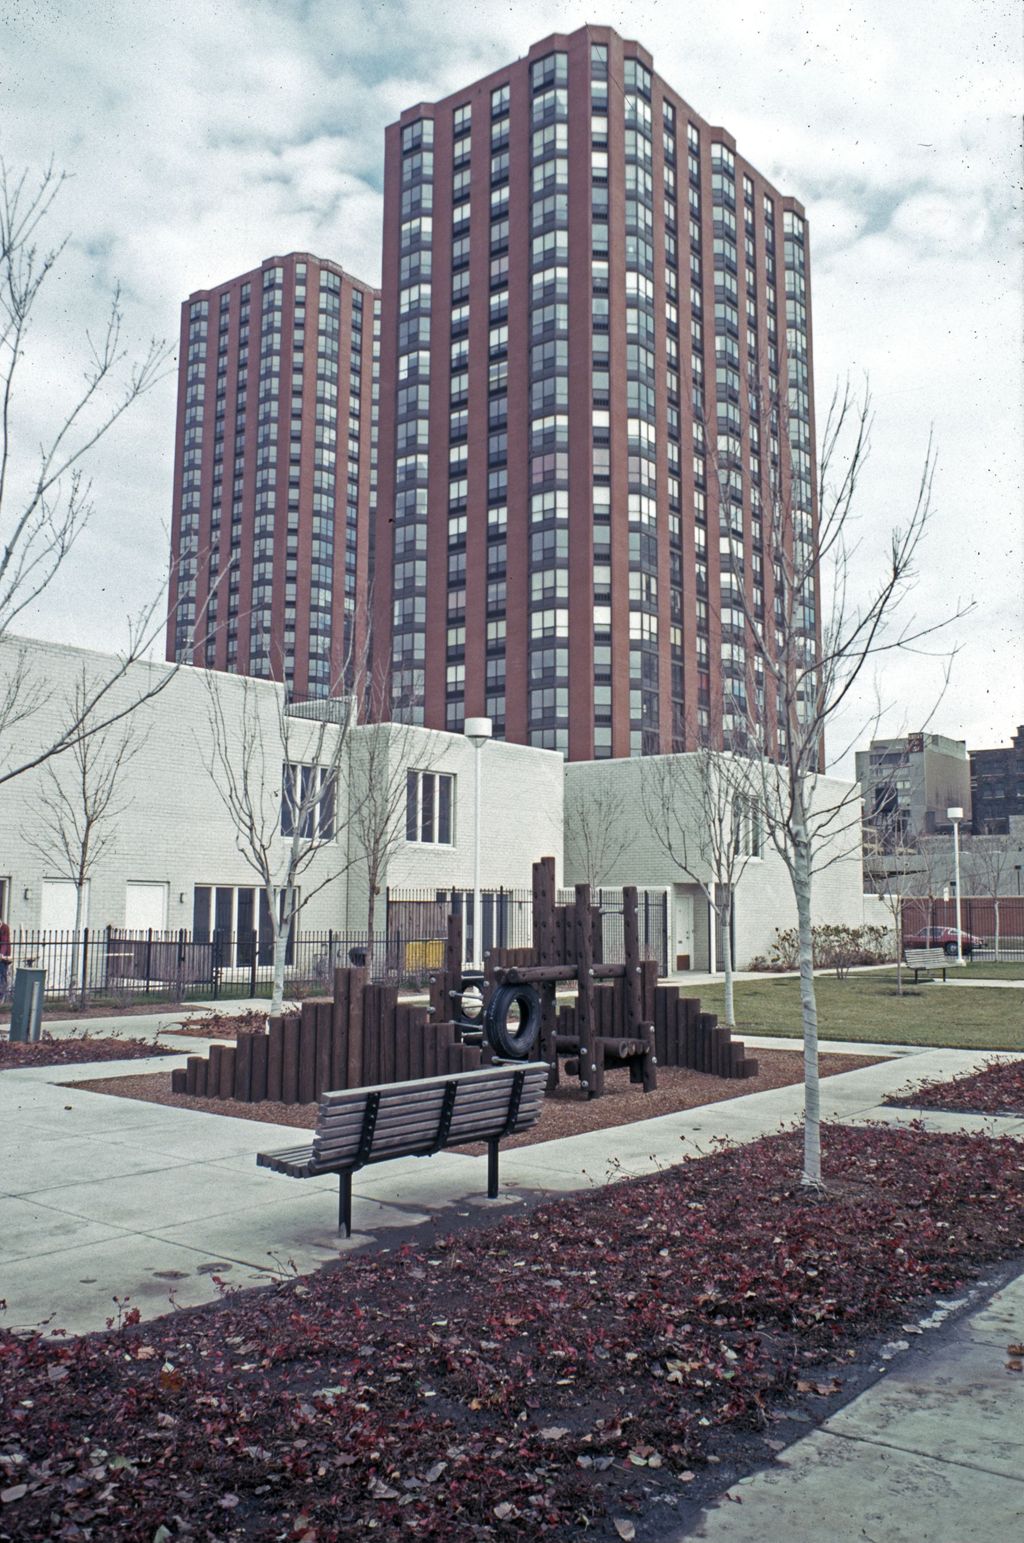 Dearborn Park residential development